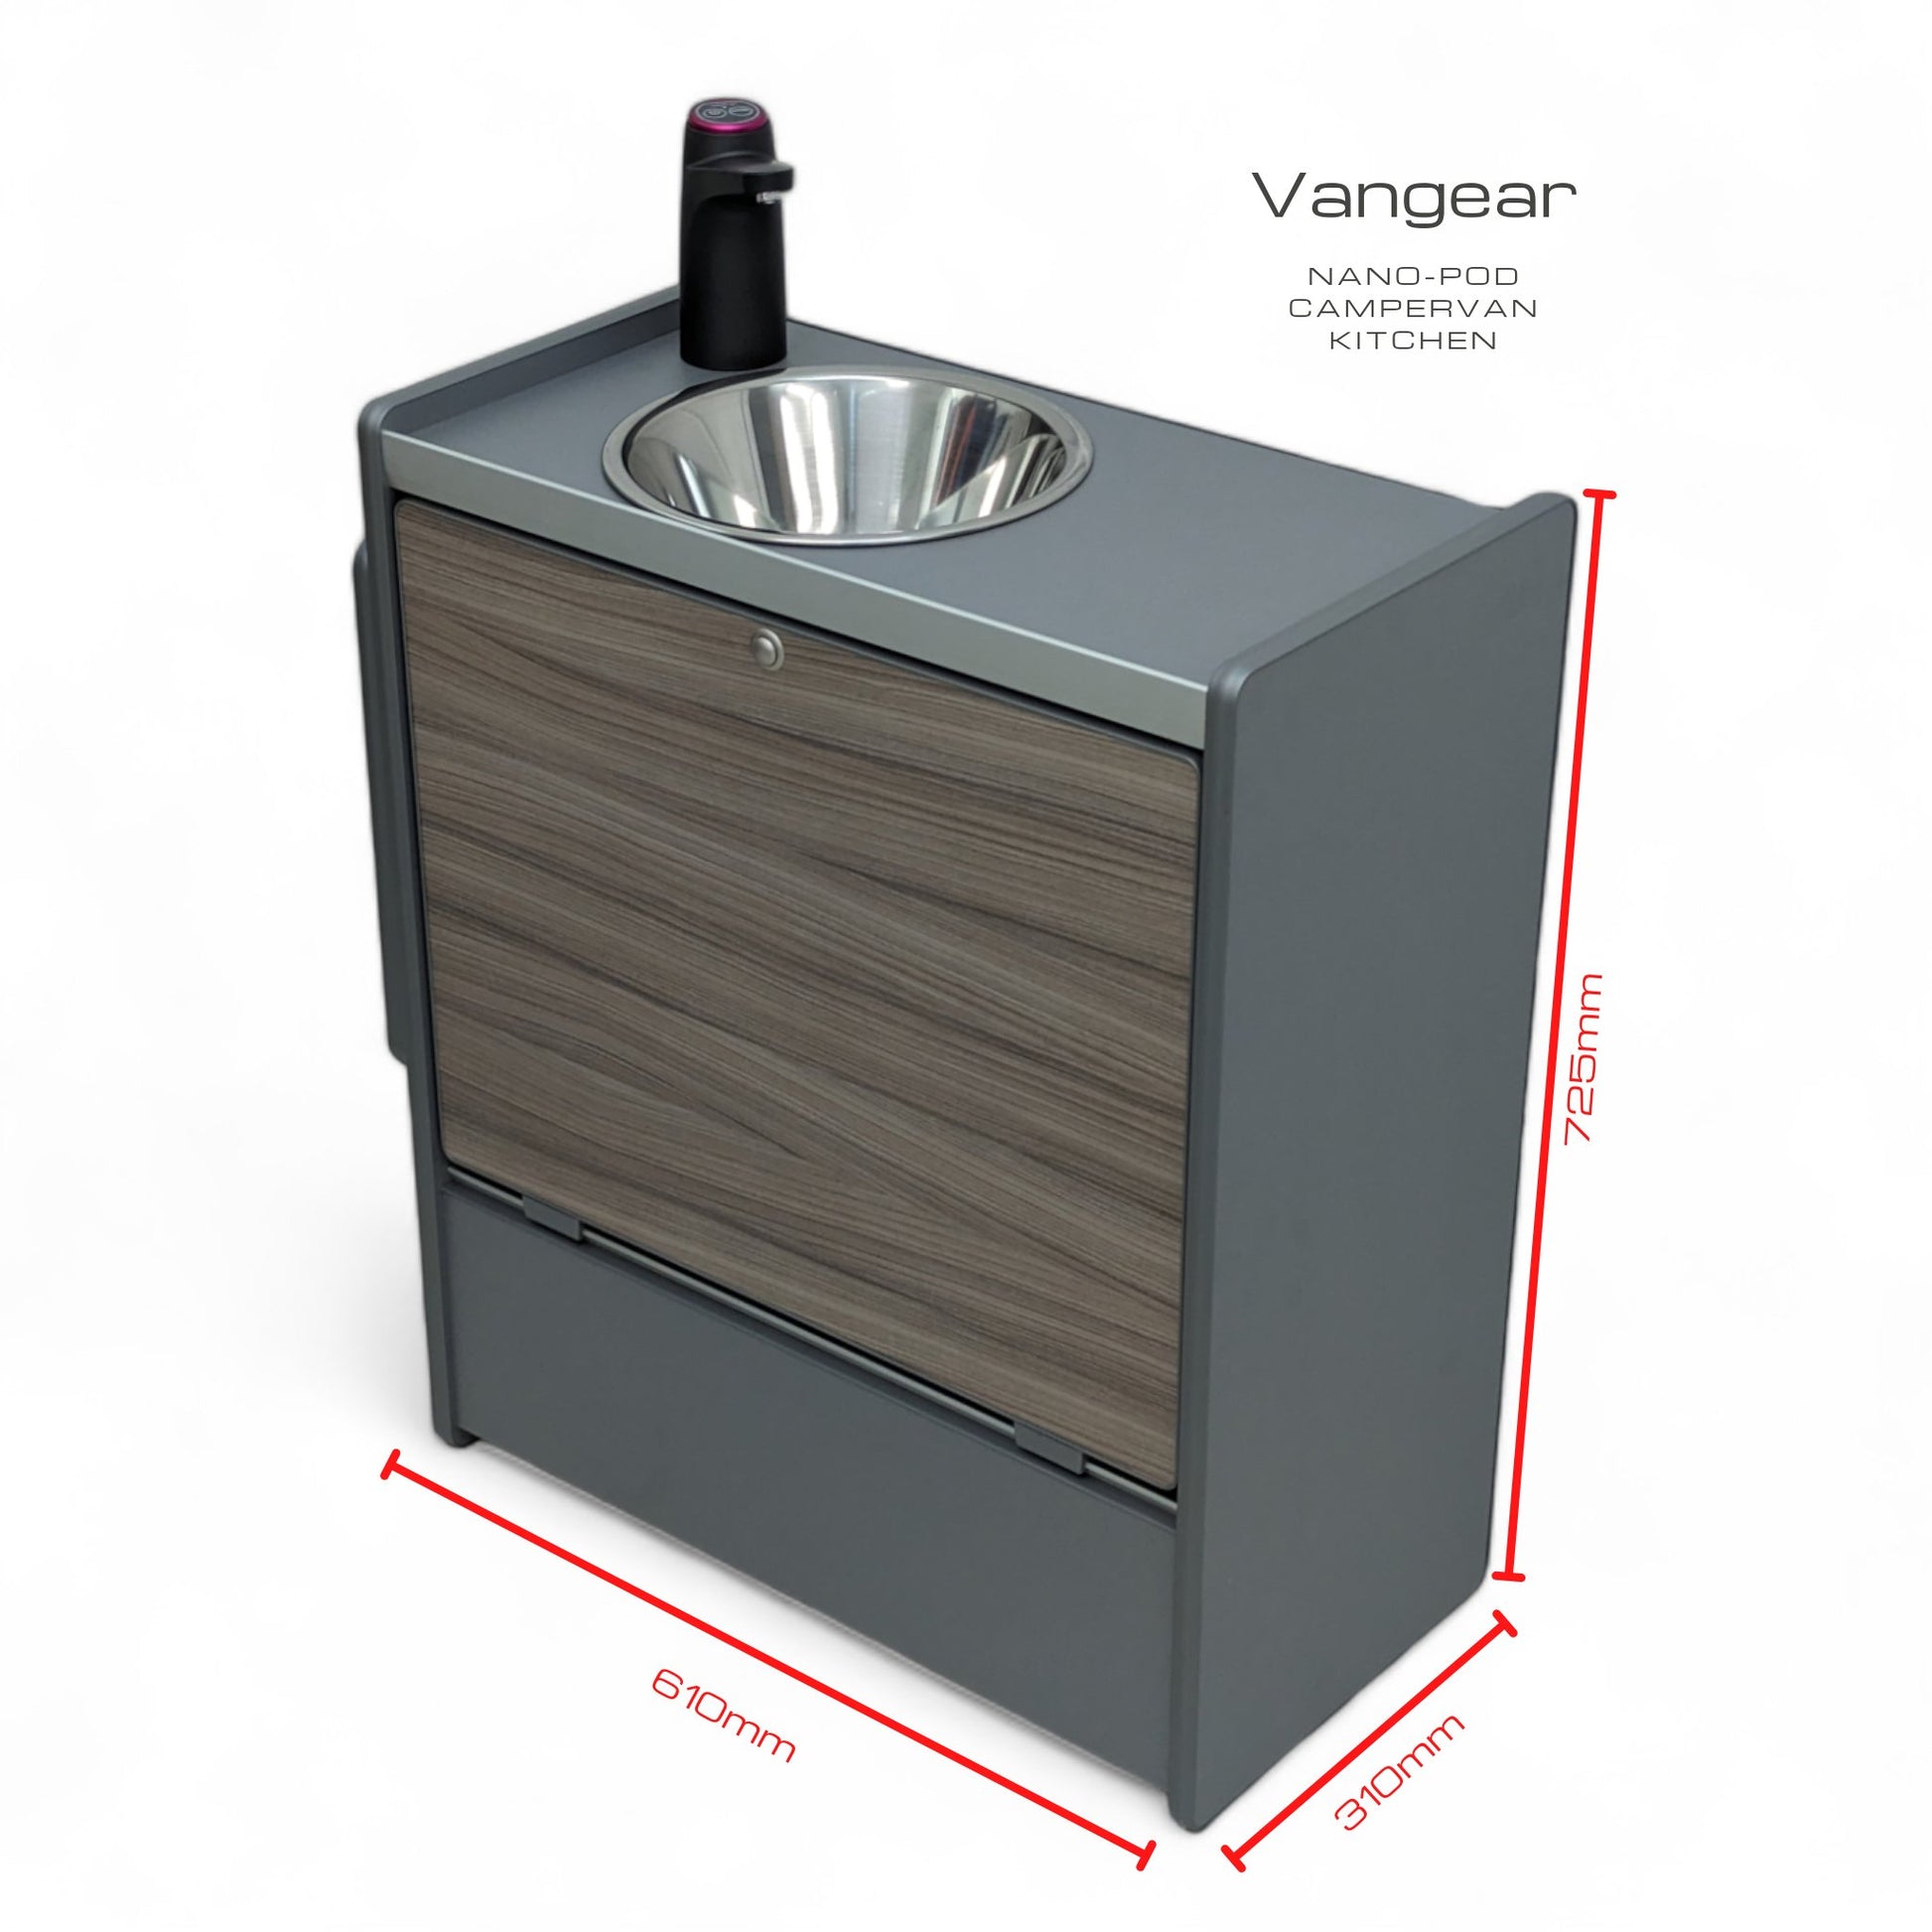 Vangear Nano-Pod Campervan Kitchen (Black) gen2.1 - Vangear UK